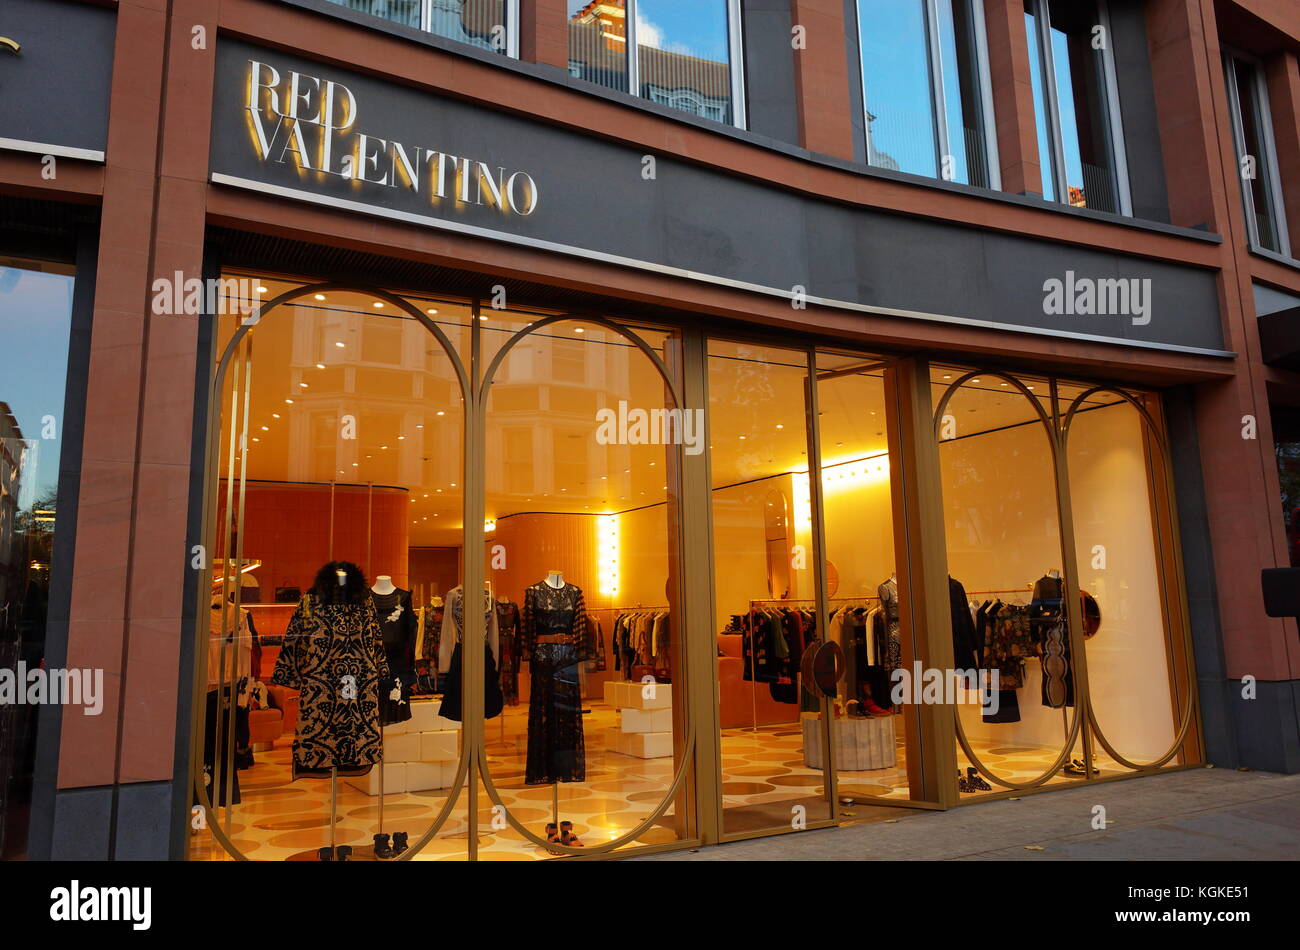 Red Valentino designer fashion store on Sloane street, London, England  Stock Photo - Alamy